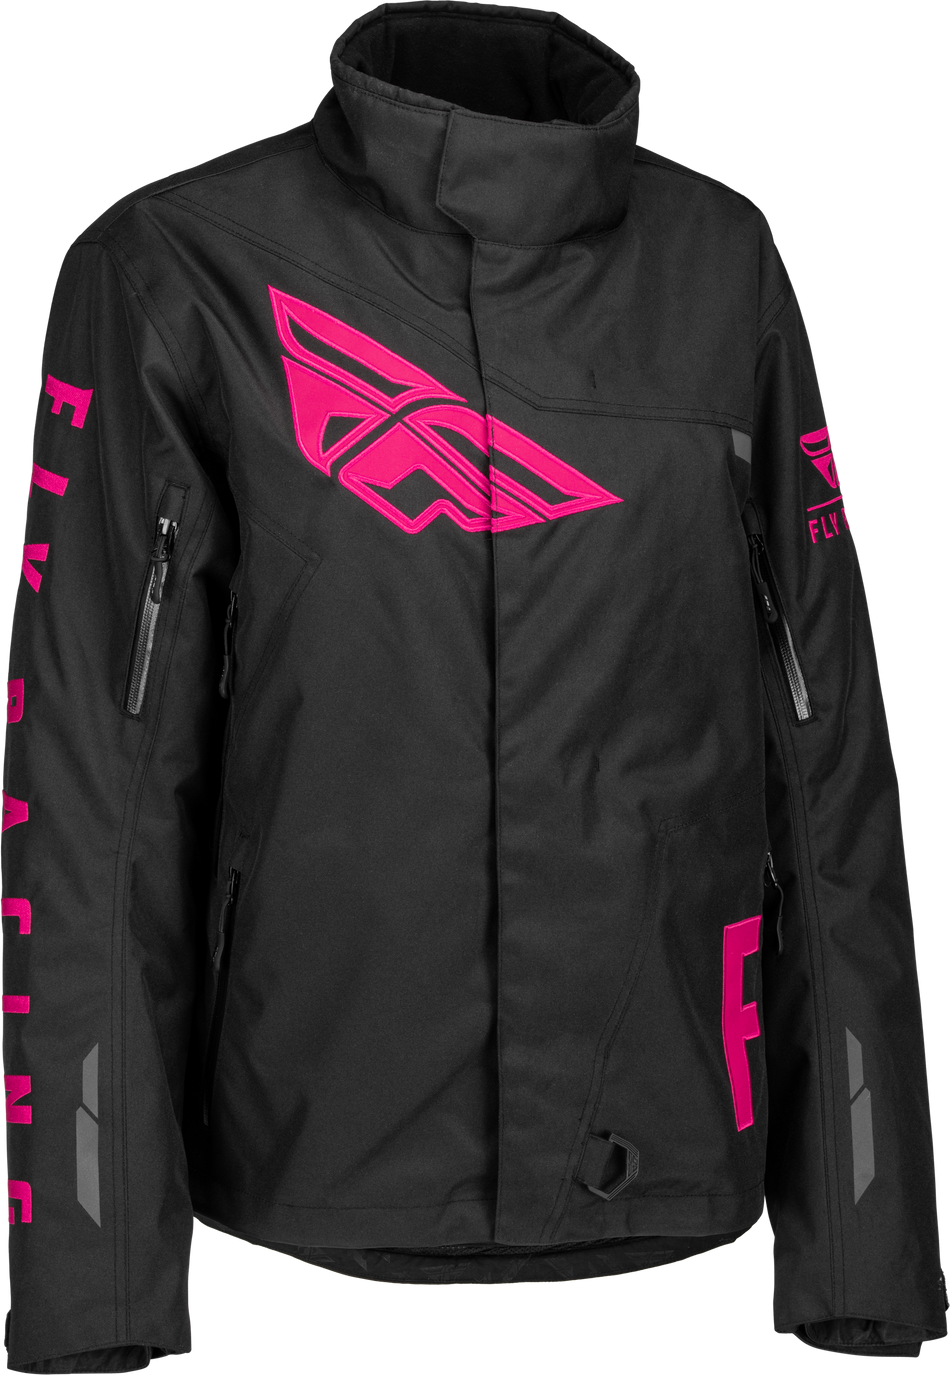 FLY RACING Women's Snx Pro Jacket Black/Pink 3x 470-45123X